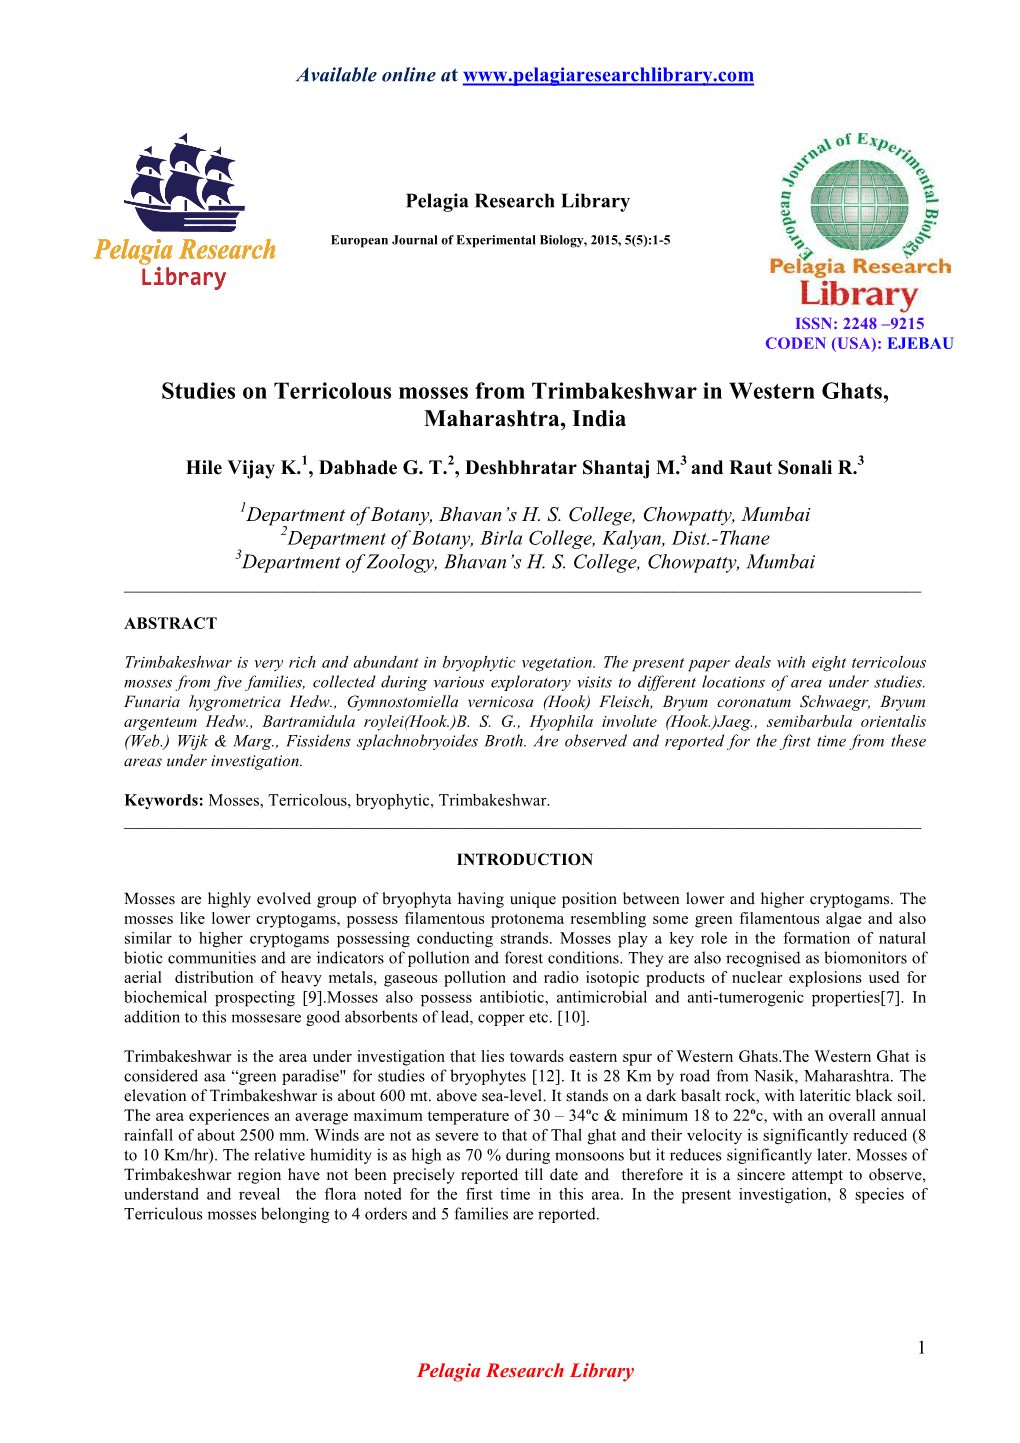 Studies on Terricolous Mosses from Trimbakeshwar in Western Ghats, Maharashtra, India